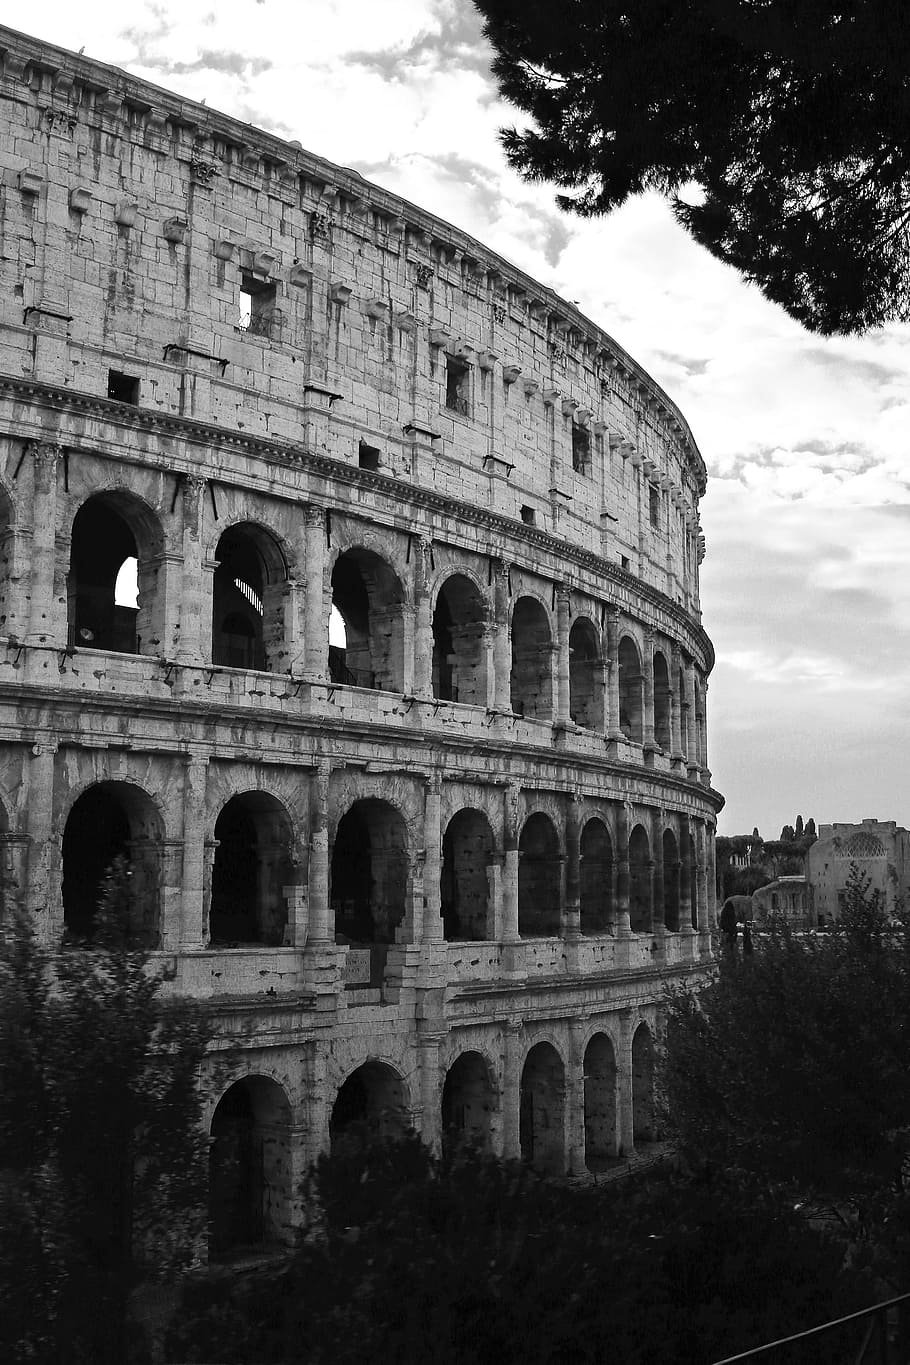 grayscale stadium, trees, coliseum, italy, rome, europe, roman, colosseum, italian, landmark